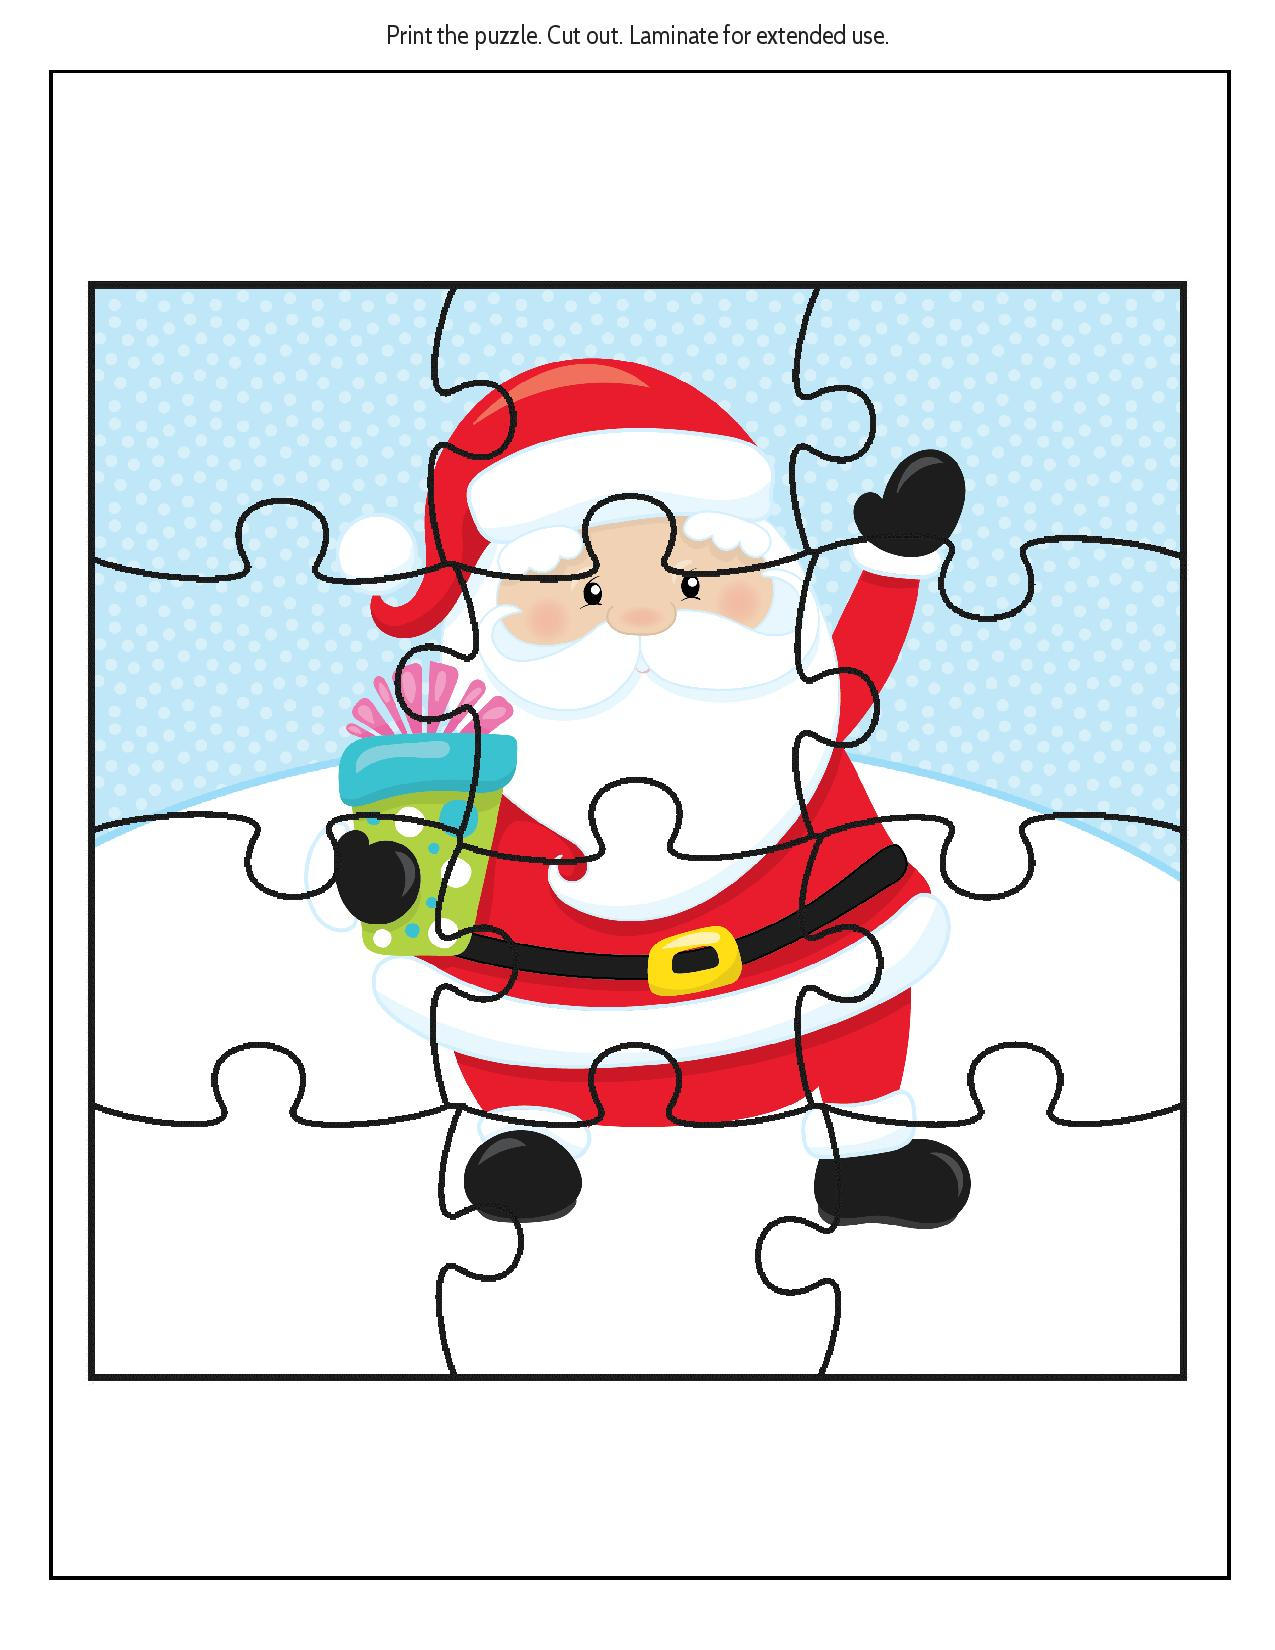 Free Educational Printable Christmas Puzzle Pack - Real And Quirky - Free Printable Christmas Puzzle Sheets